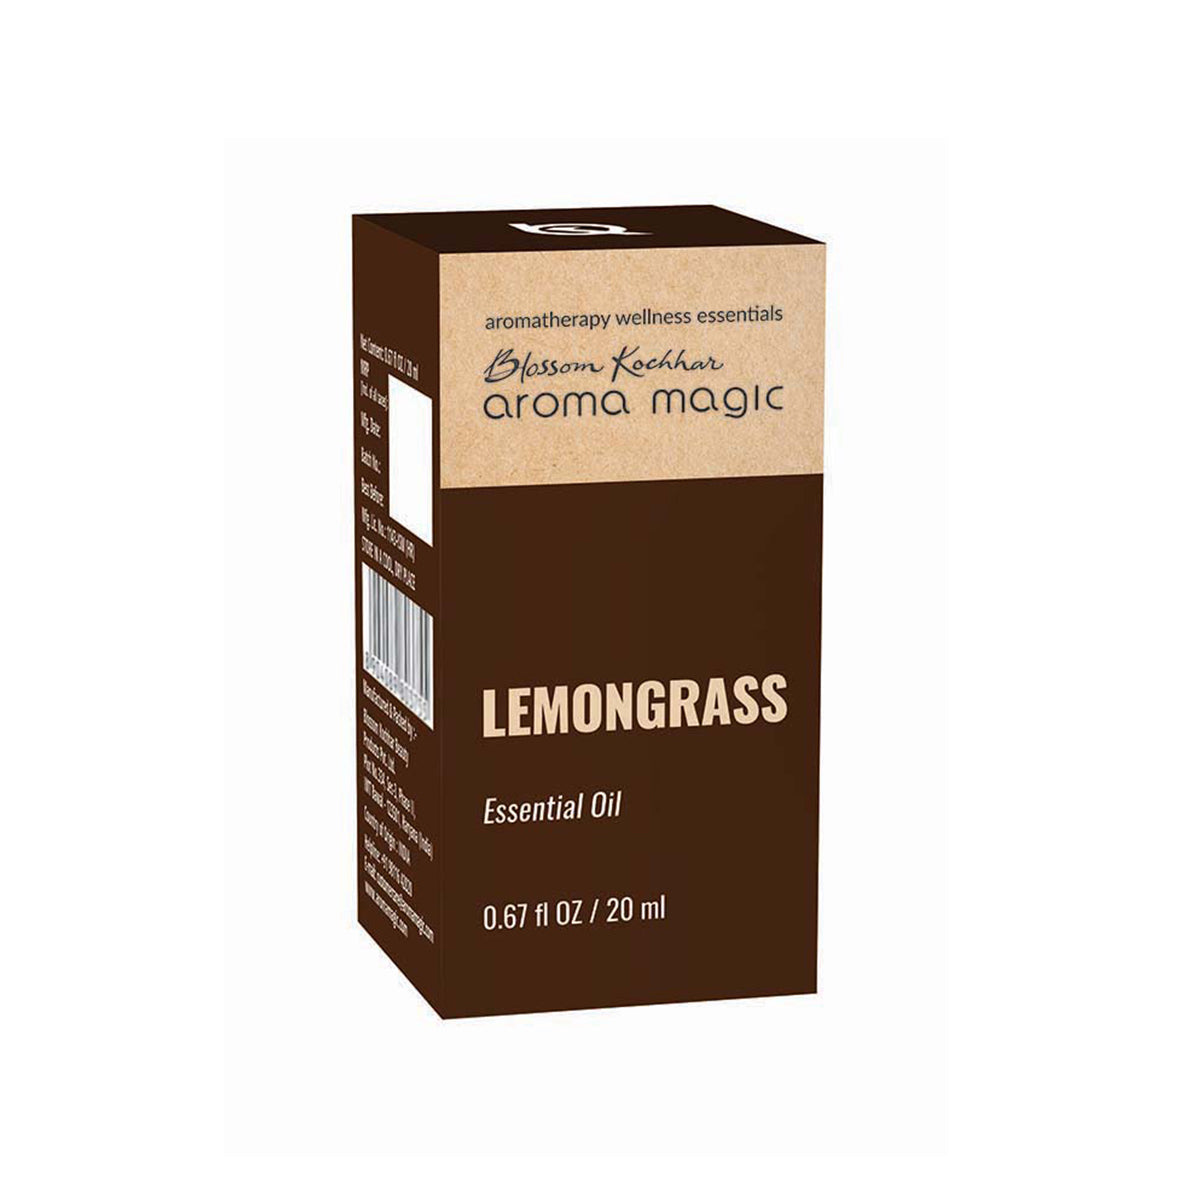 Airome Essential Oil, Lemongrass, Aware - 15 ml